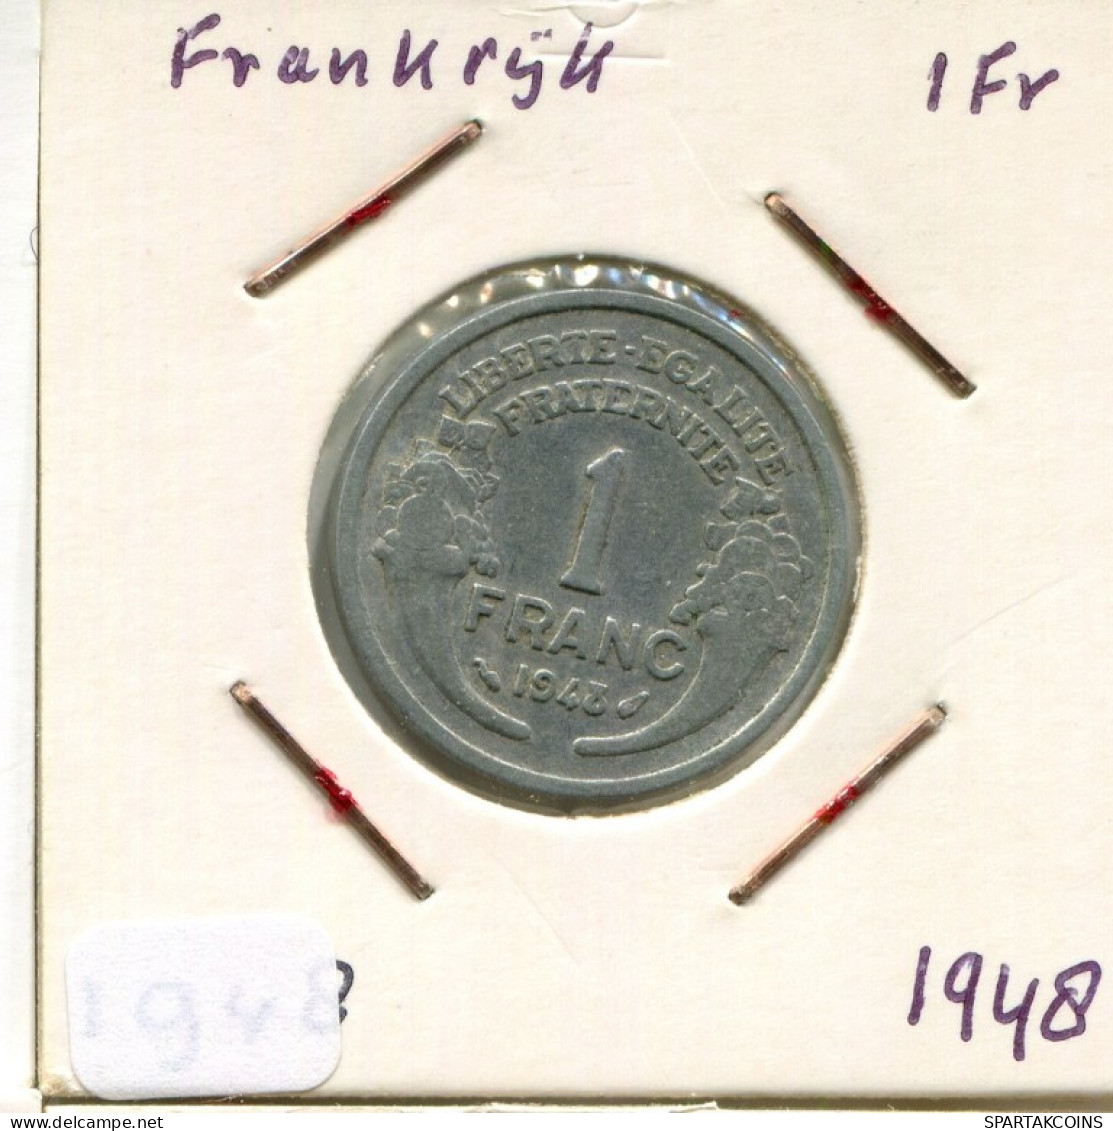 1 FRANC 1948 FRANCE Coin French Coin #AM544.U.A - 1 Franc